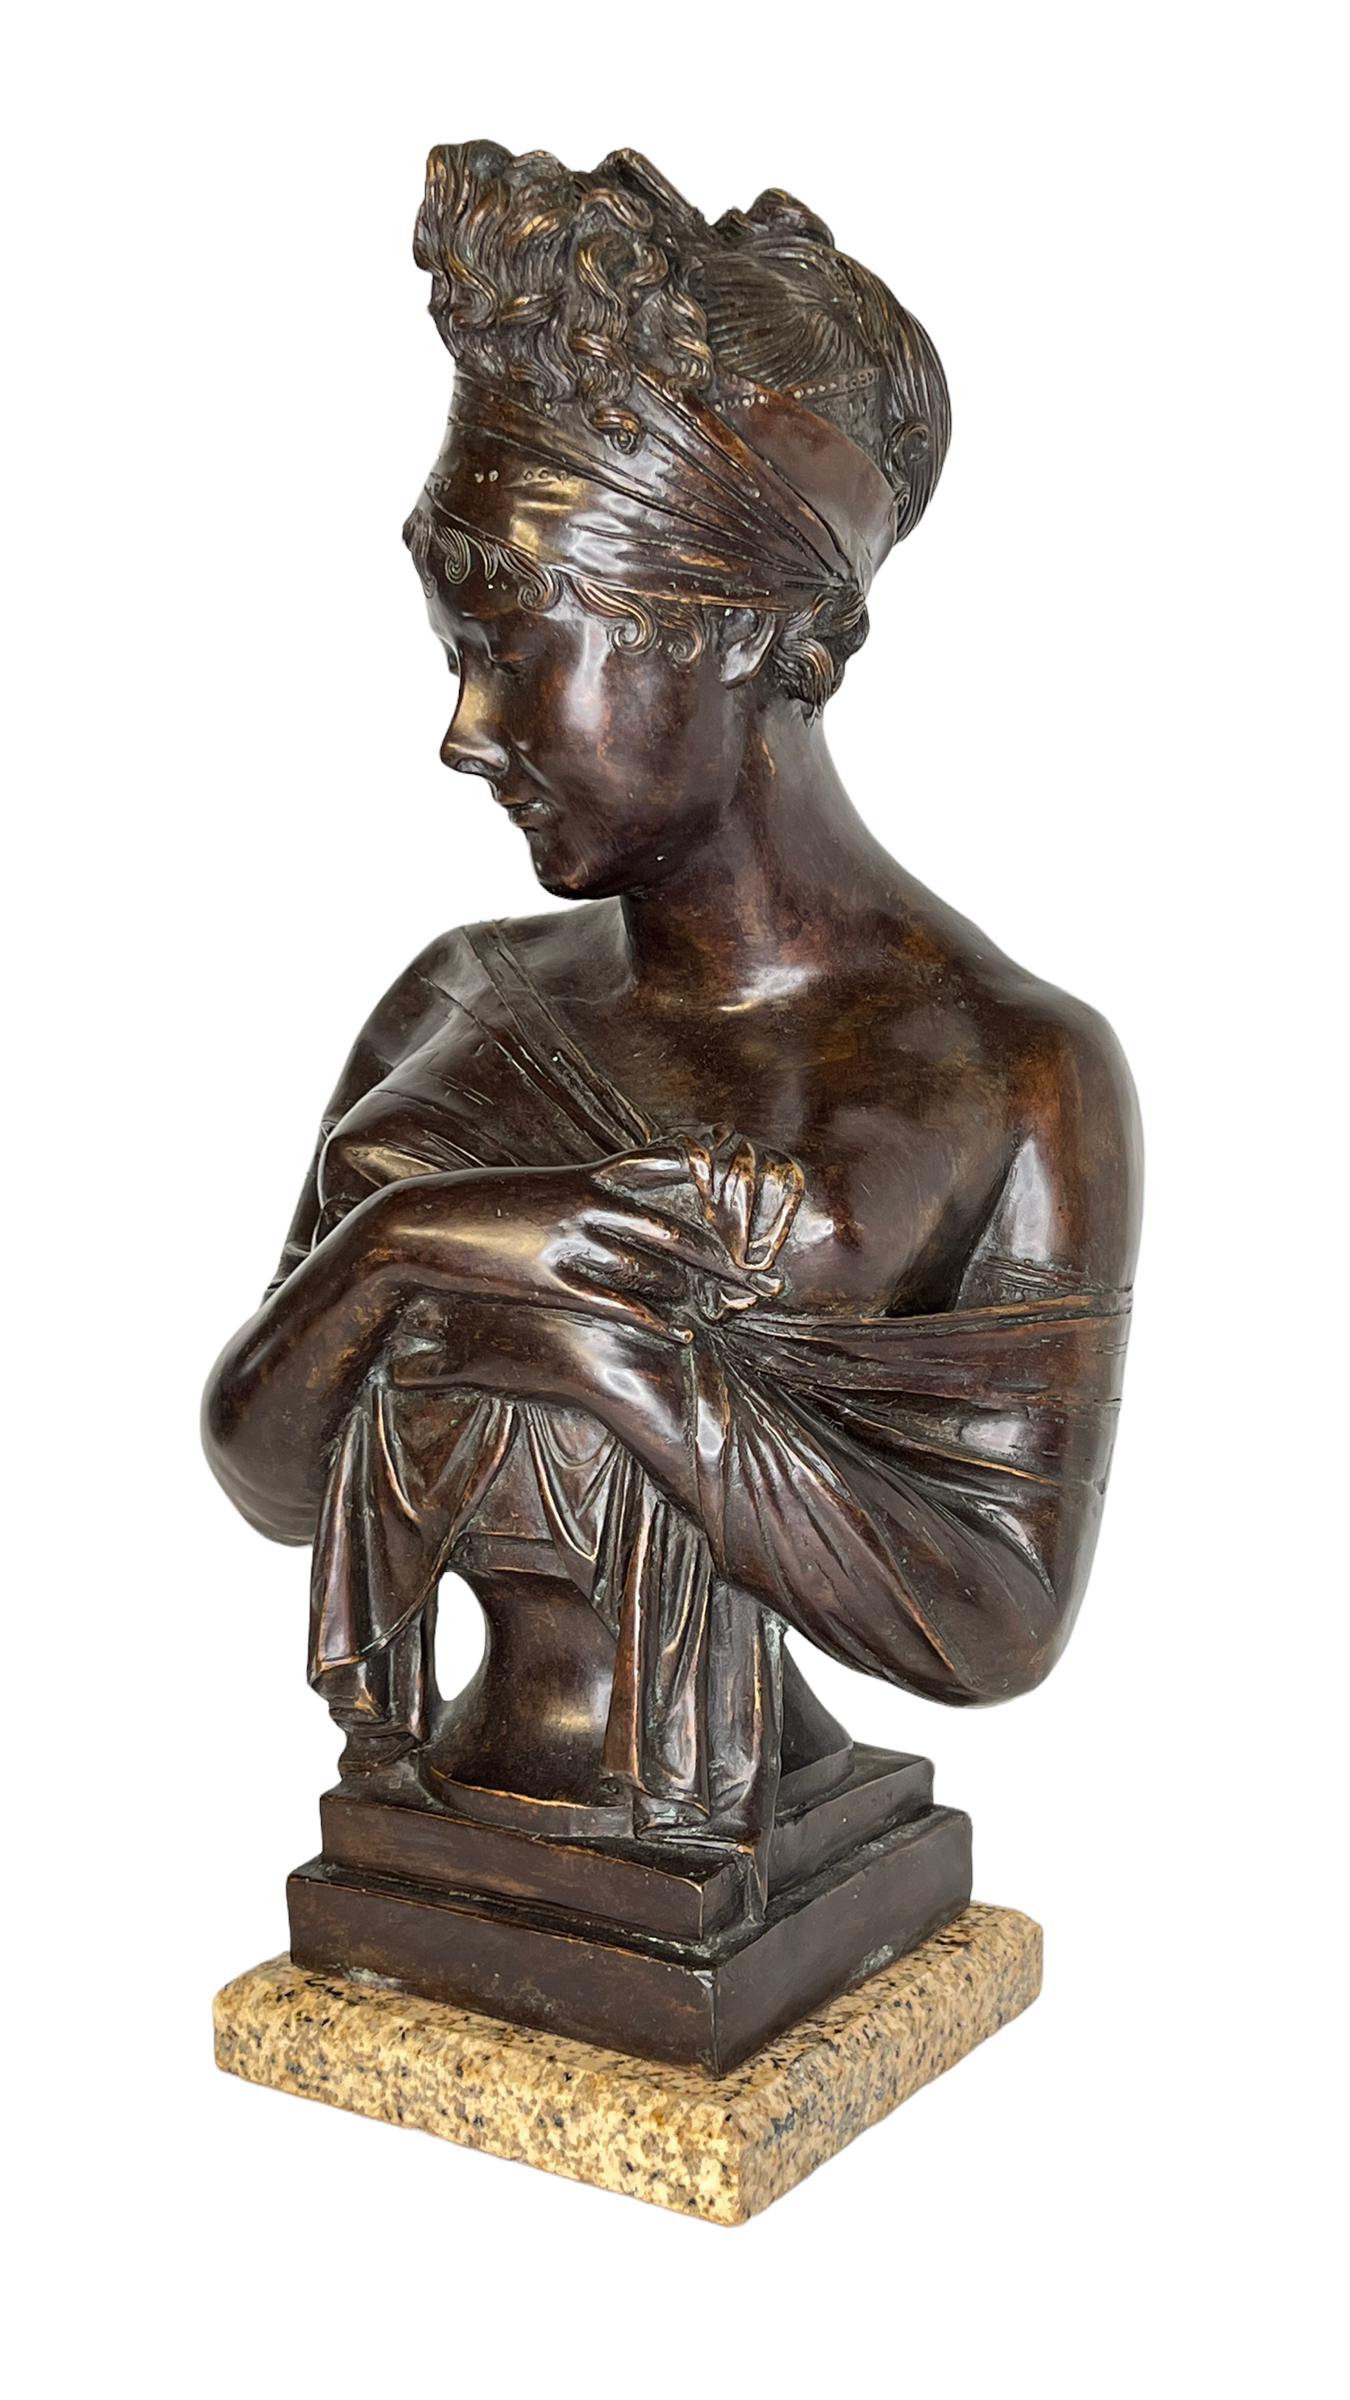 Madame Juliette recamier bronze bust after the original model Joseph Chinard (1756-1813), mounted on a granite base.